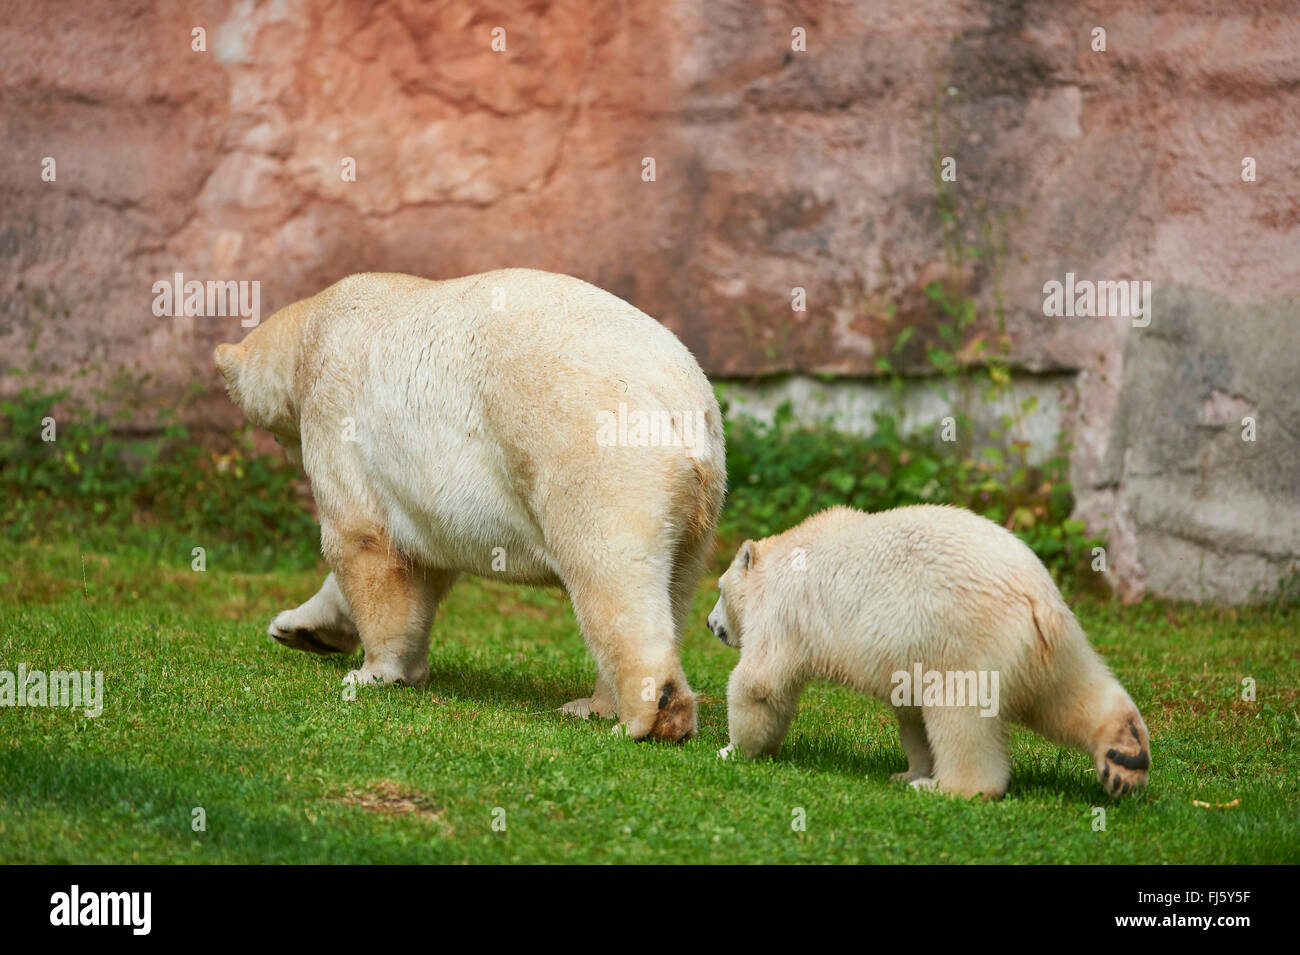 polar bear (Ursus maritimus), polar bear cub walking behind its mother, side view Stock Photo